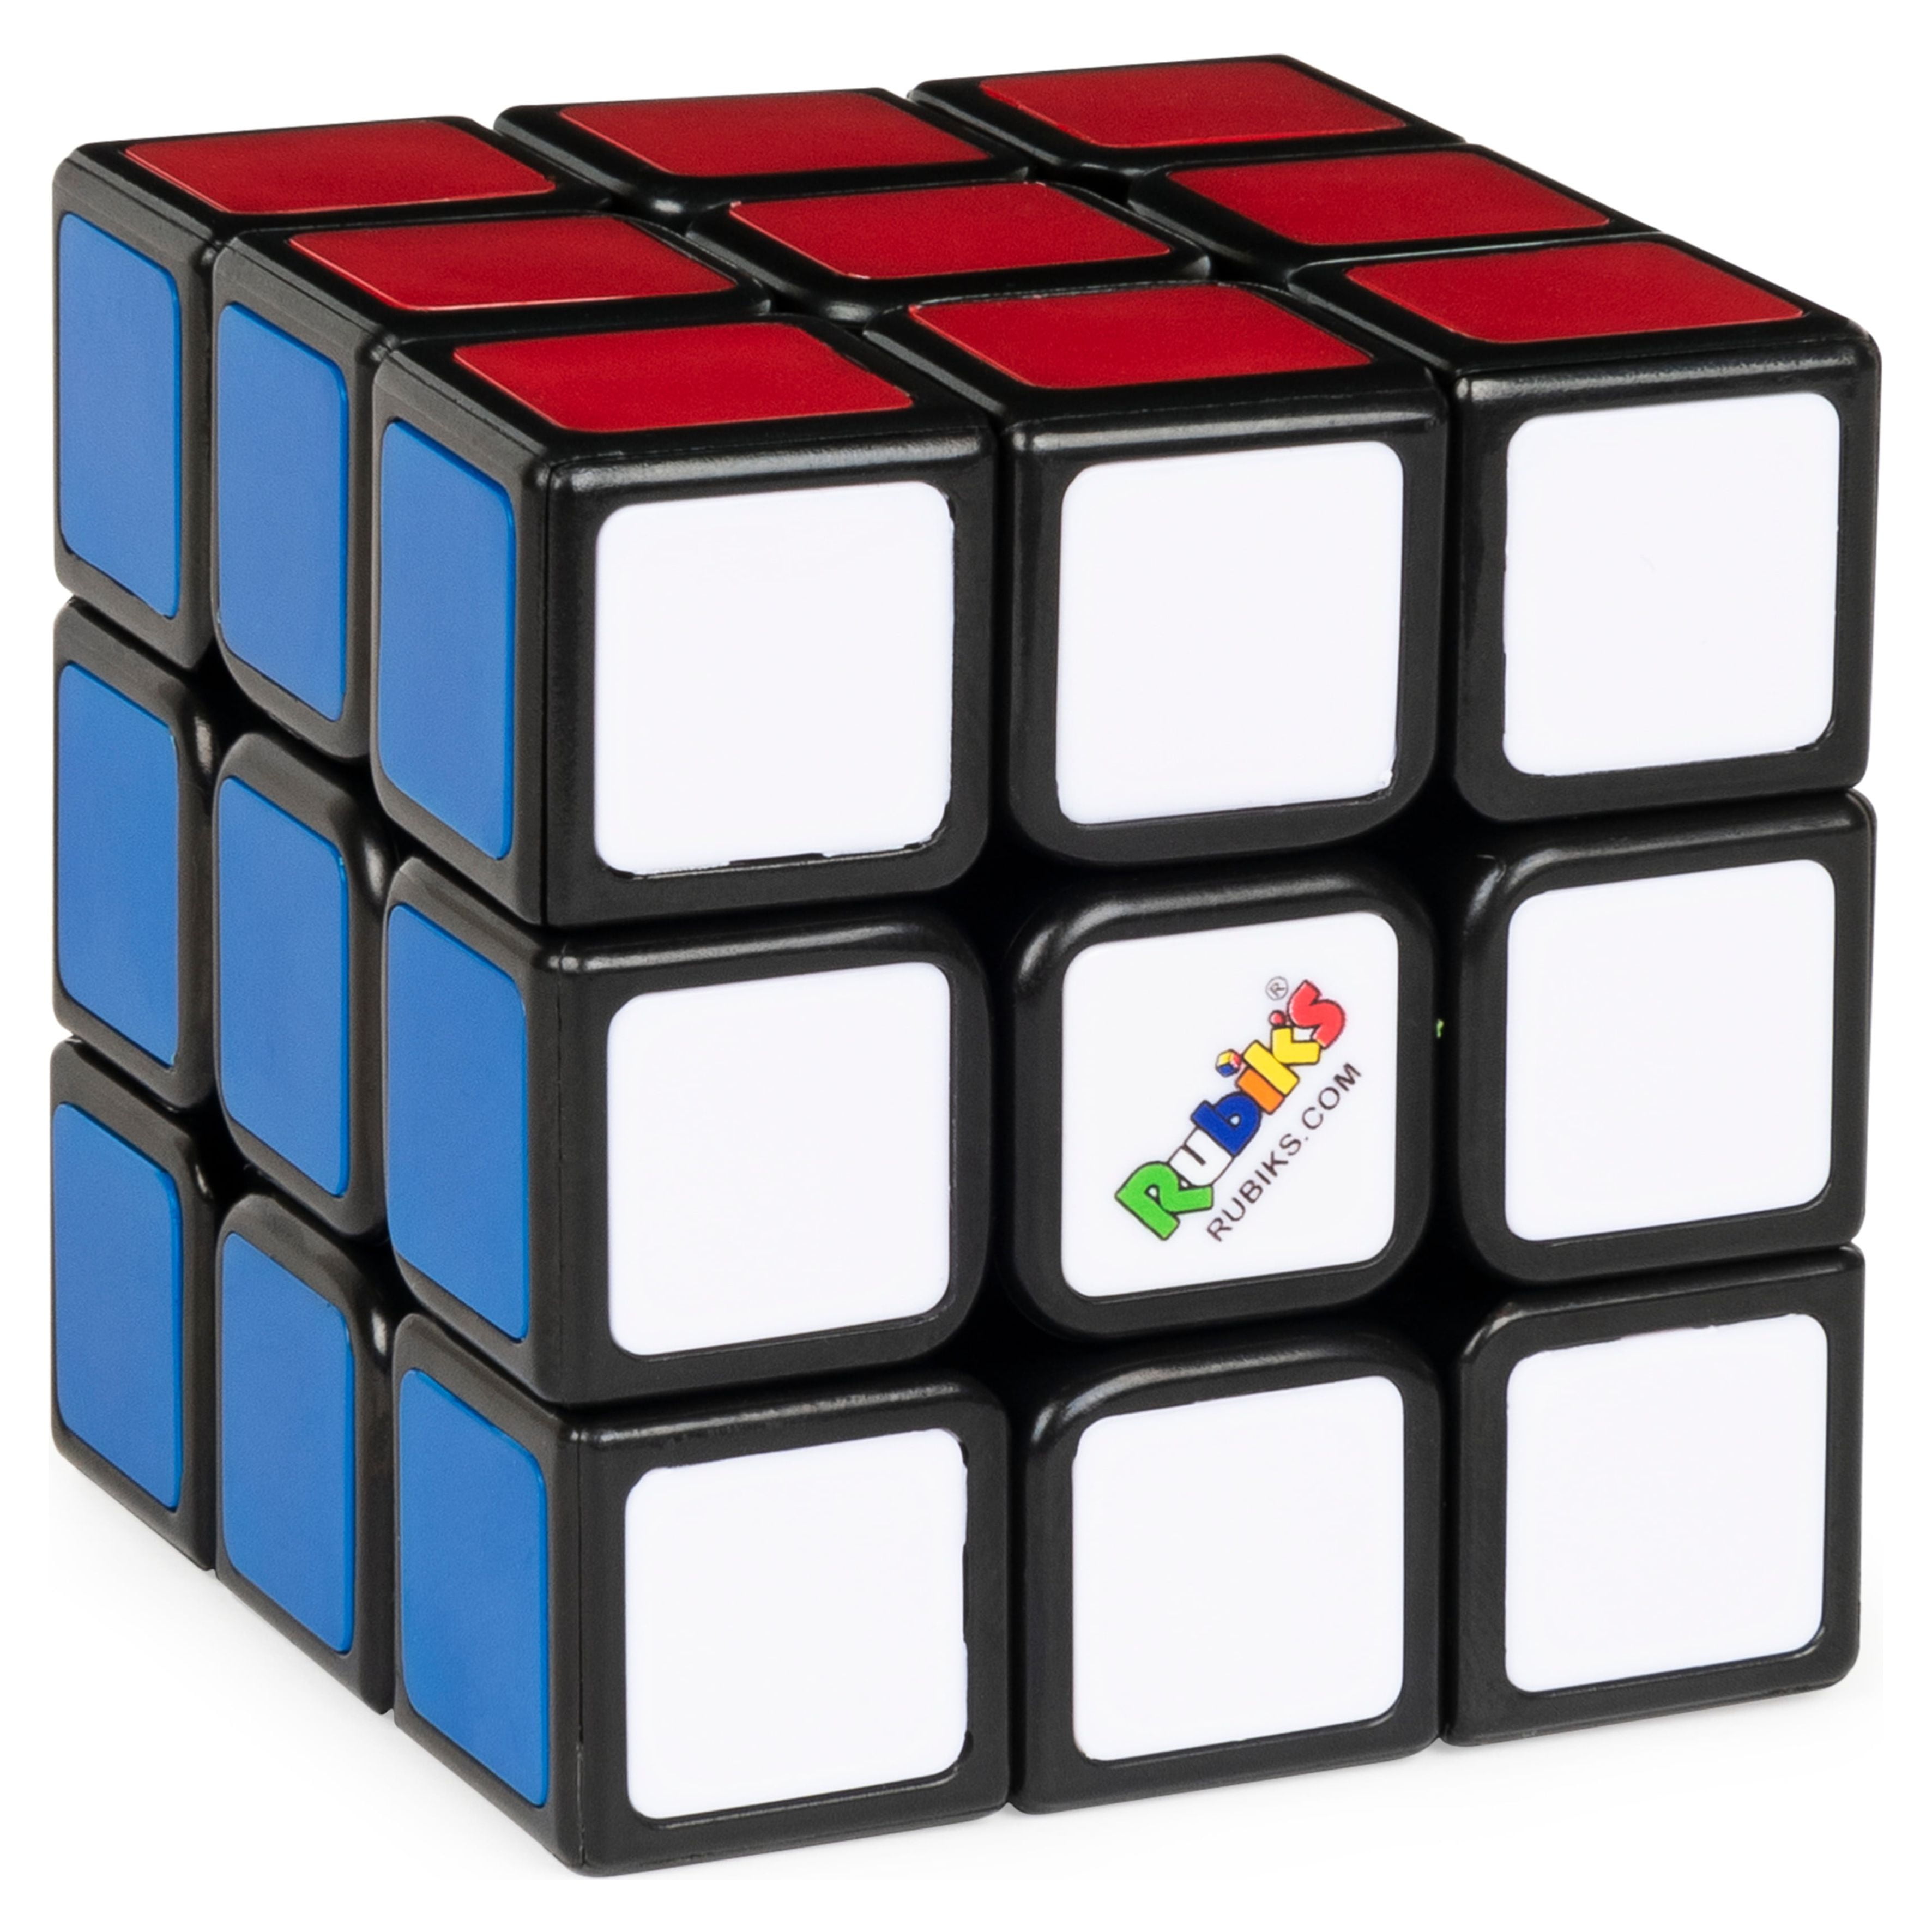 Gan 356 Air Master Speed Cube 3x3 Magic Cube Puzzle Toys 56mm